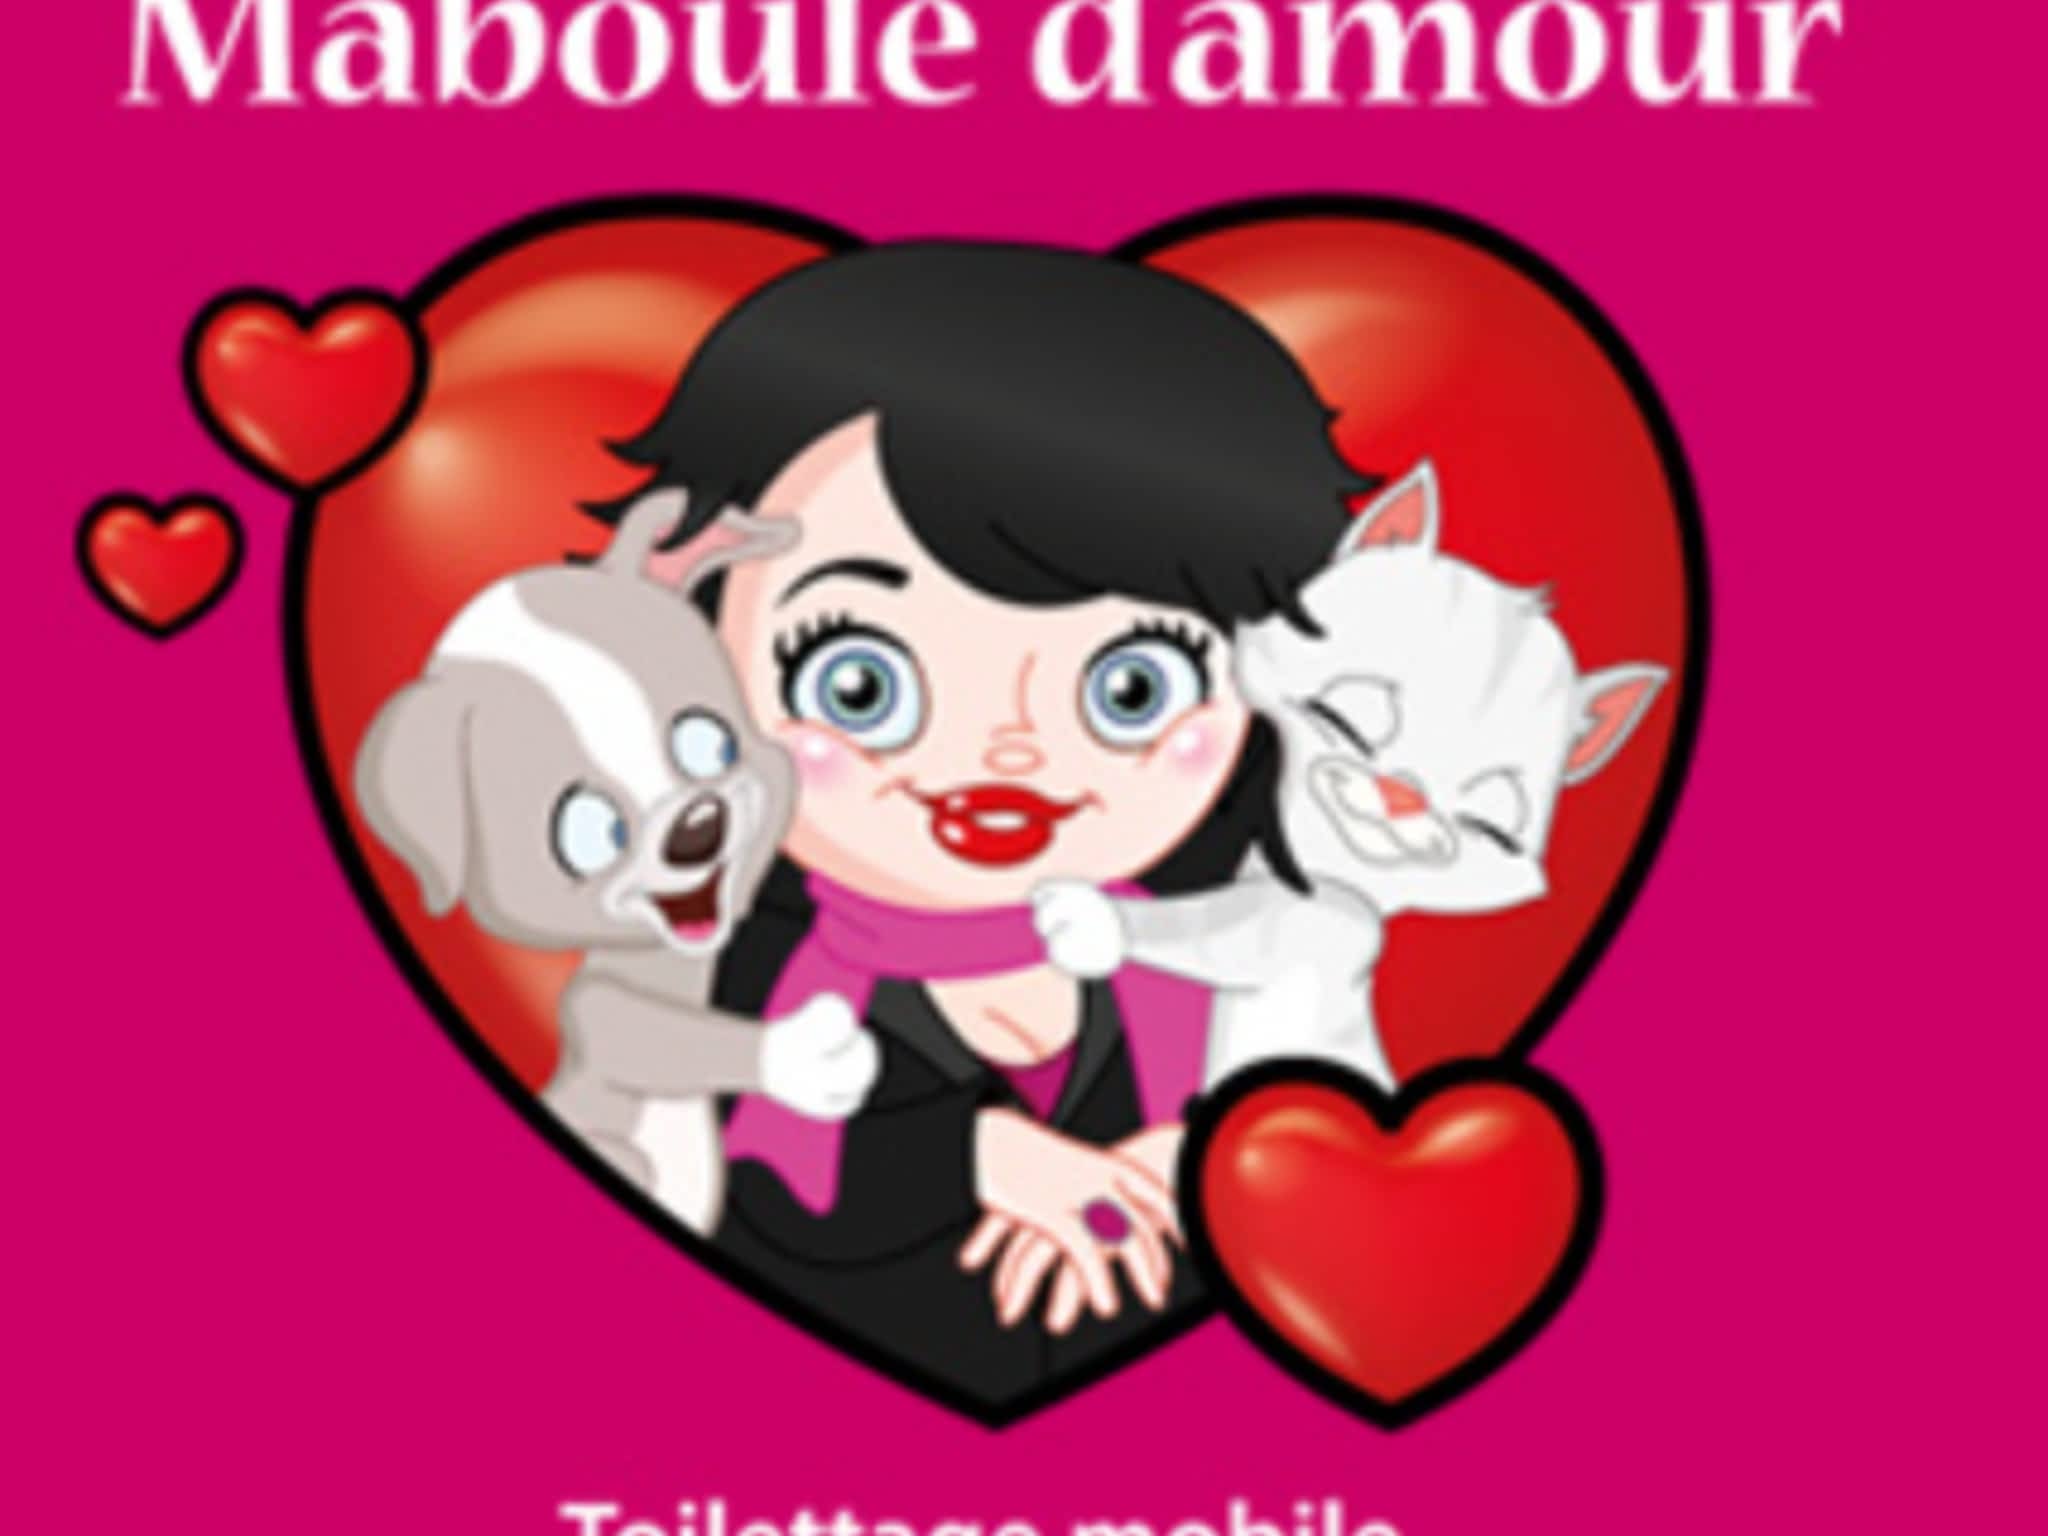 photo Maboule d'Amour Services Mobile